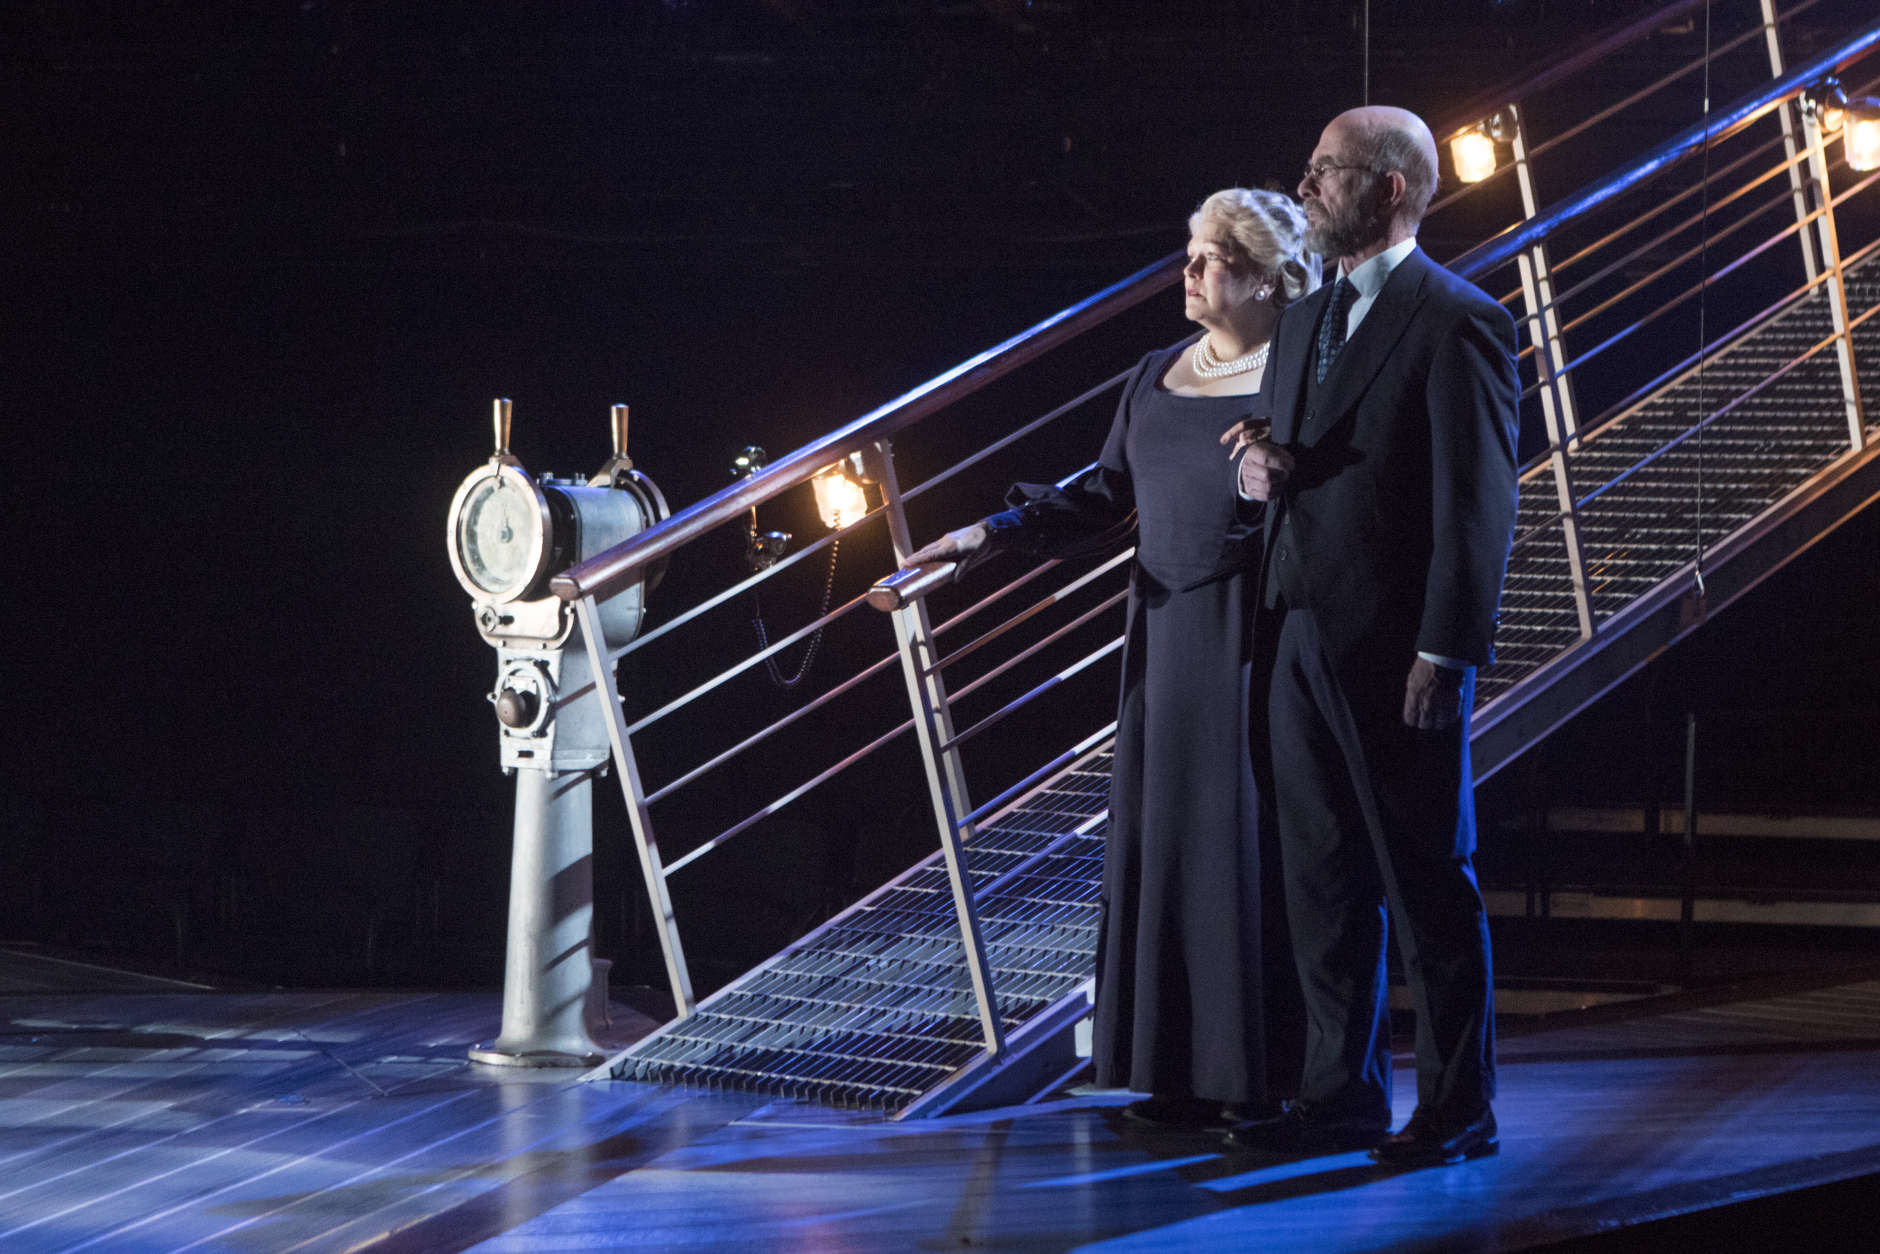 Showtunes, right ahead! ‘Titanic’ musical hits Signature Theatre WTOP